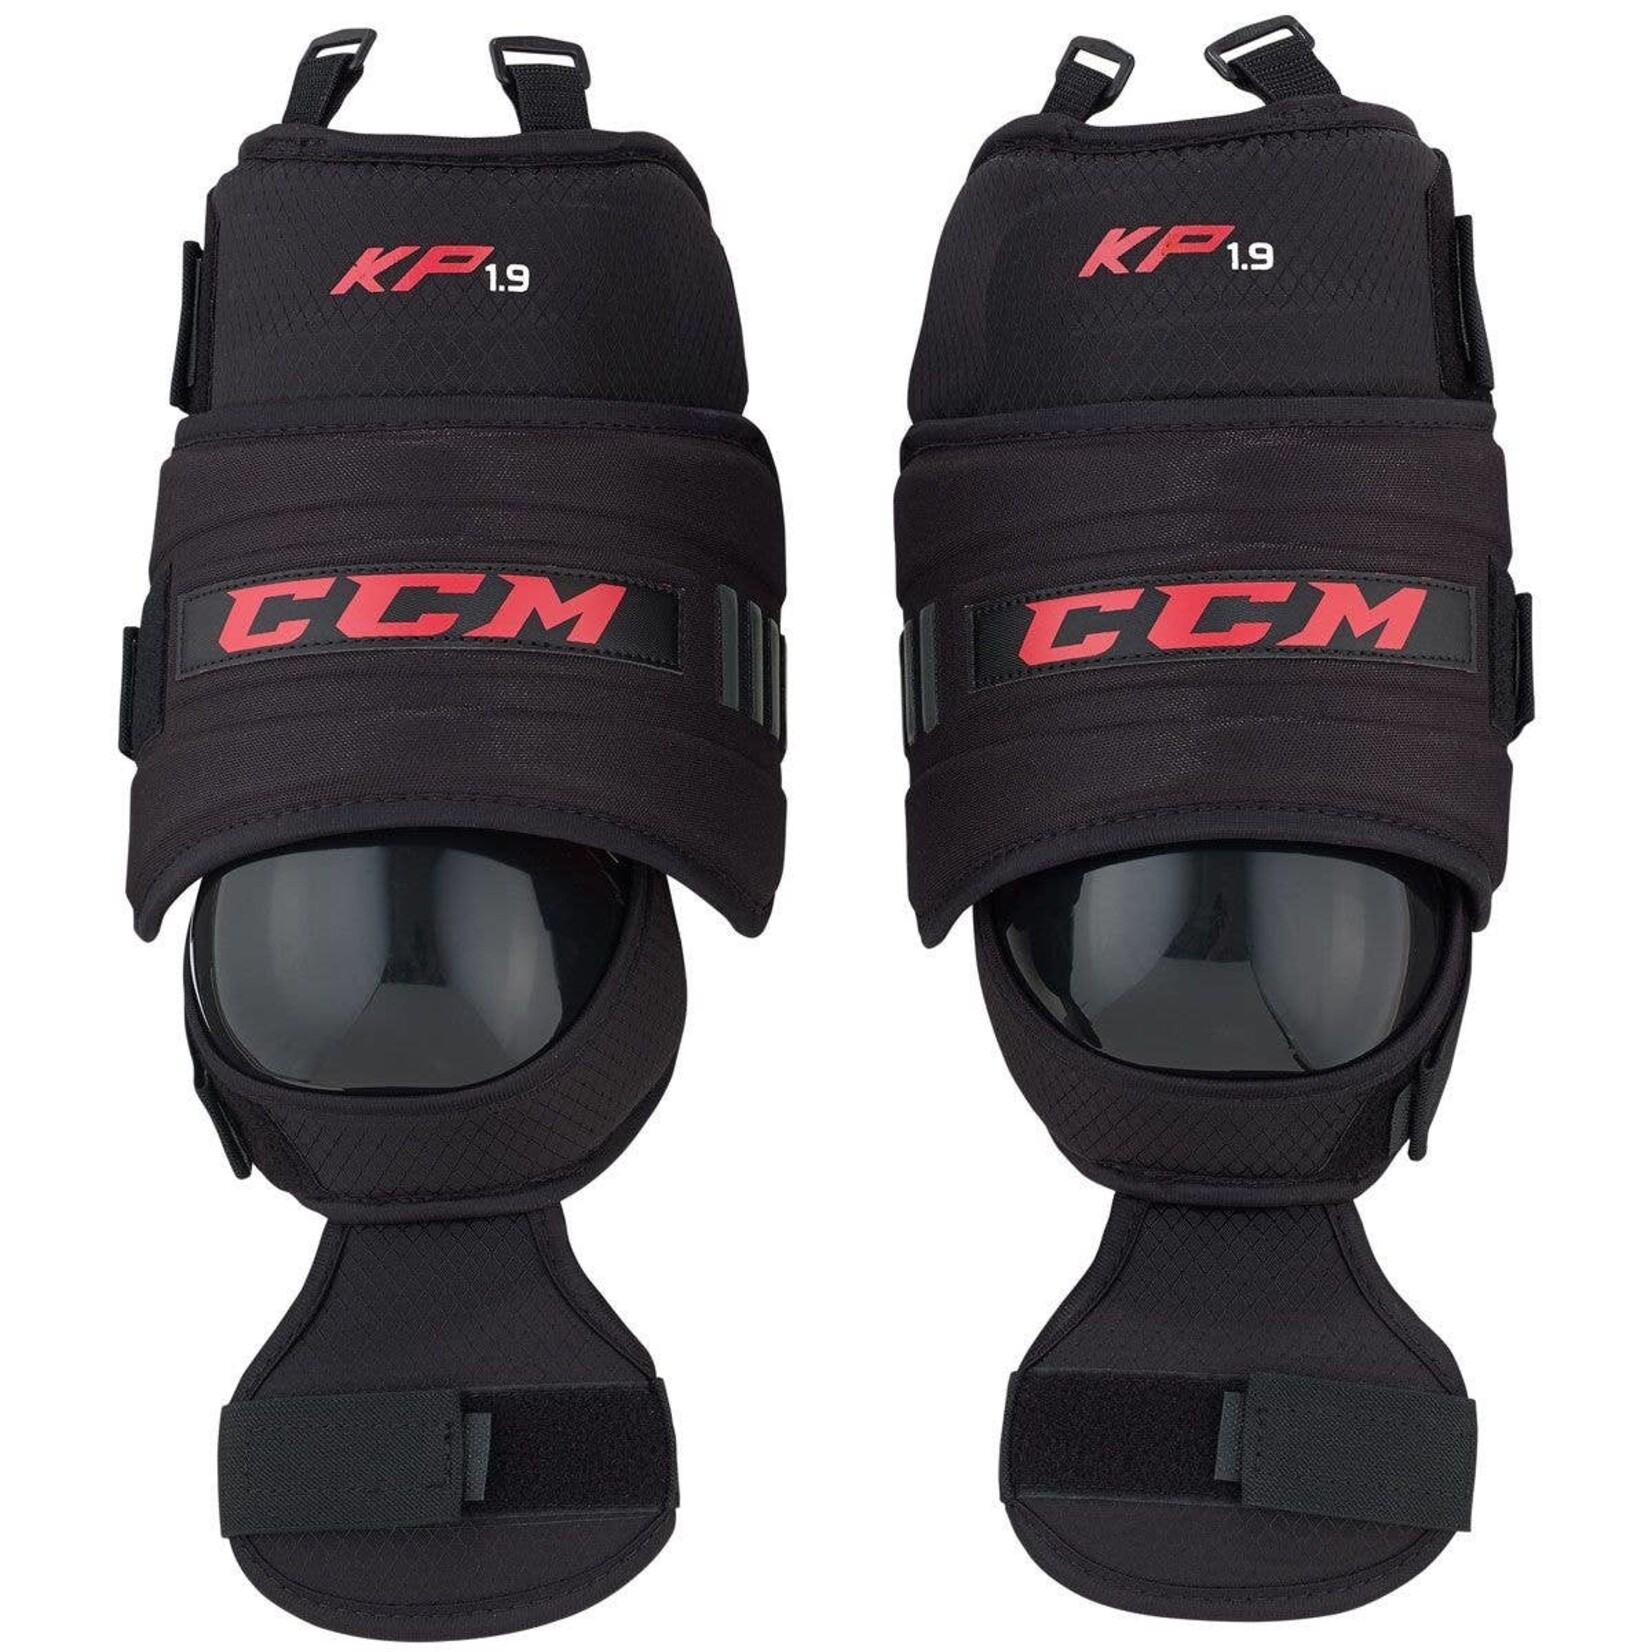 CCM CCM Goal Knee Protector, 1.9, Senior